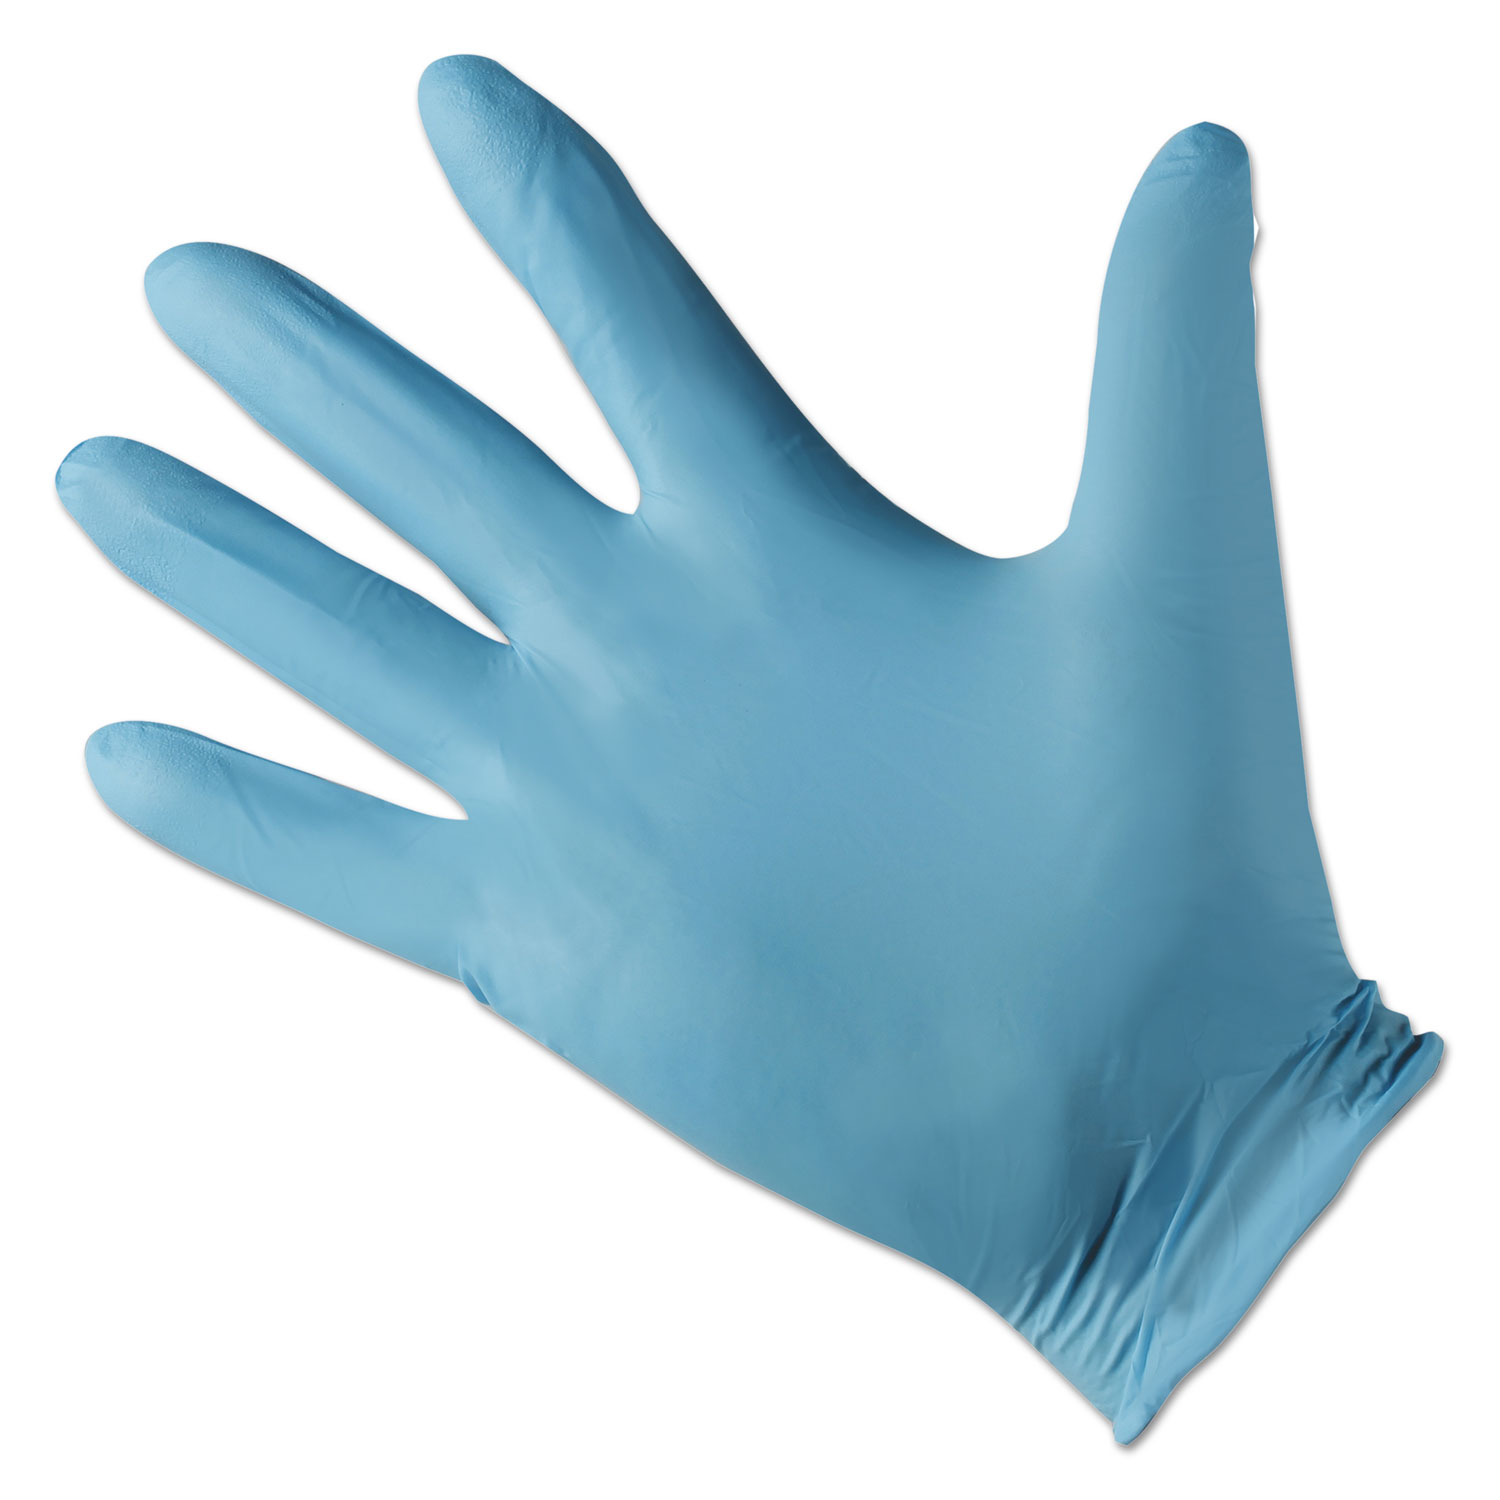  KleenGuard 417-57373 G10 Nitrile Gloves, Powder-Free, Blue, 242mm Length, Large, 100/Box, 10 Boxes/CT (KCC57373CT) 